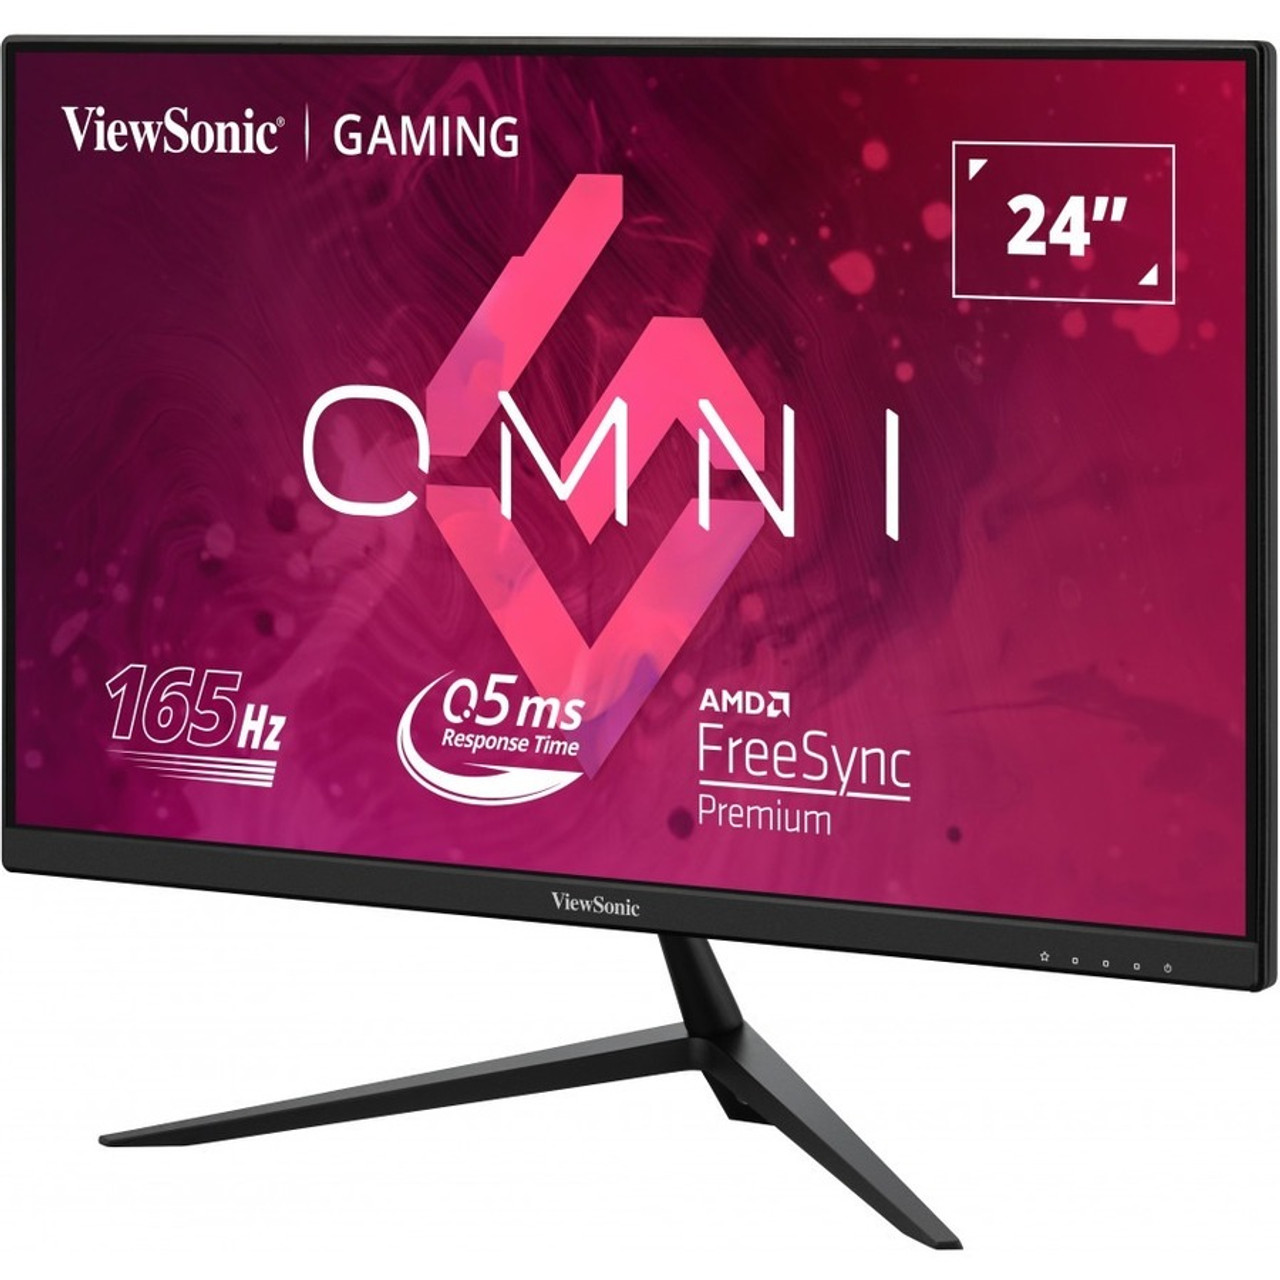 ViewSonic OMNI VX2428 24 Inch Gaming Monitor 165hz | Beach Audio